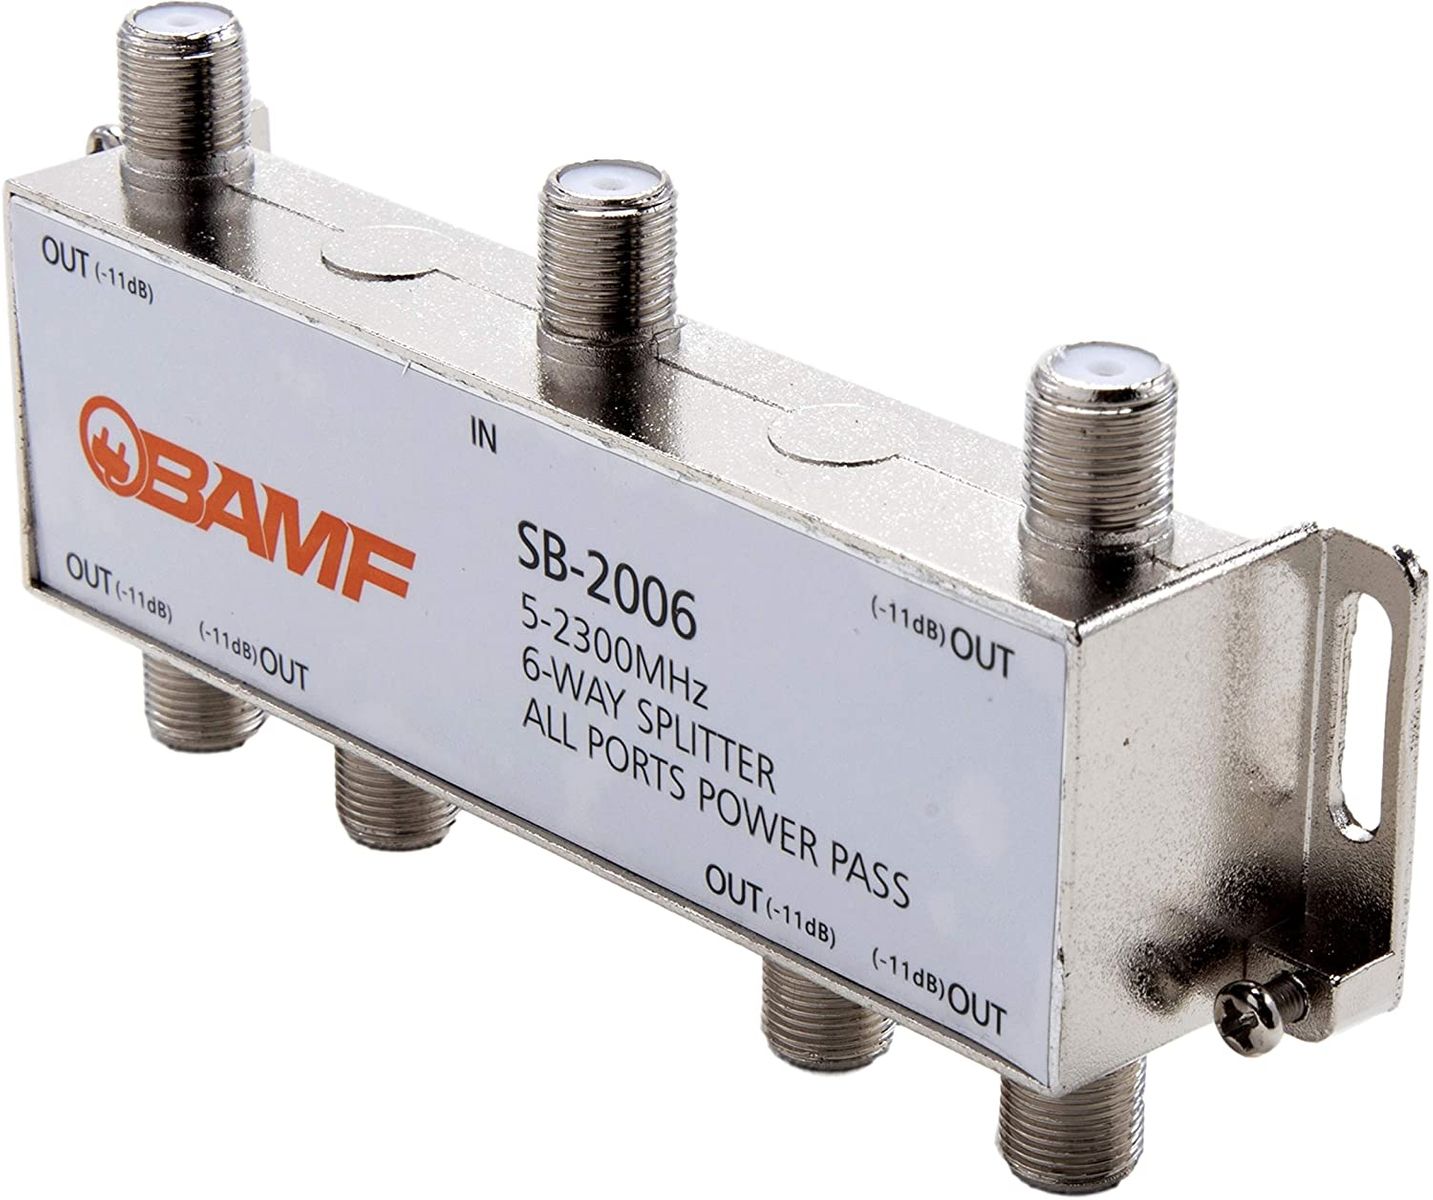 BAMF 6-Way Coax Cable Splitter Bi-Directional MoCA 5-2300MHz